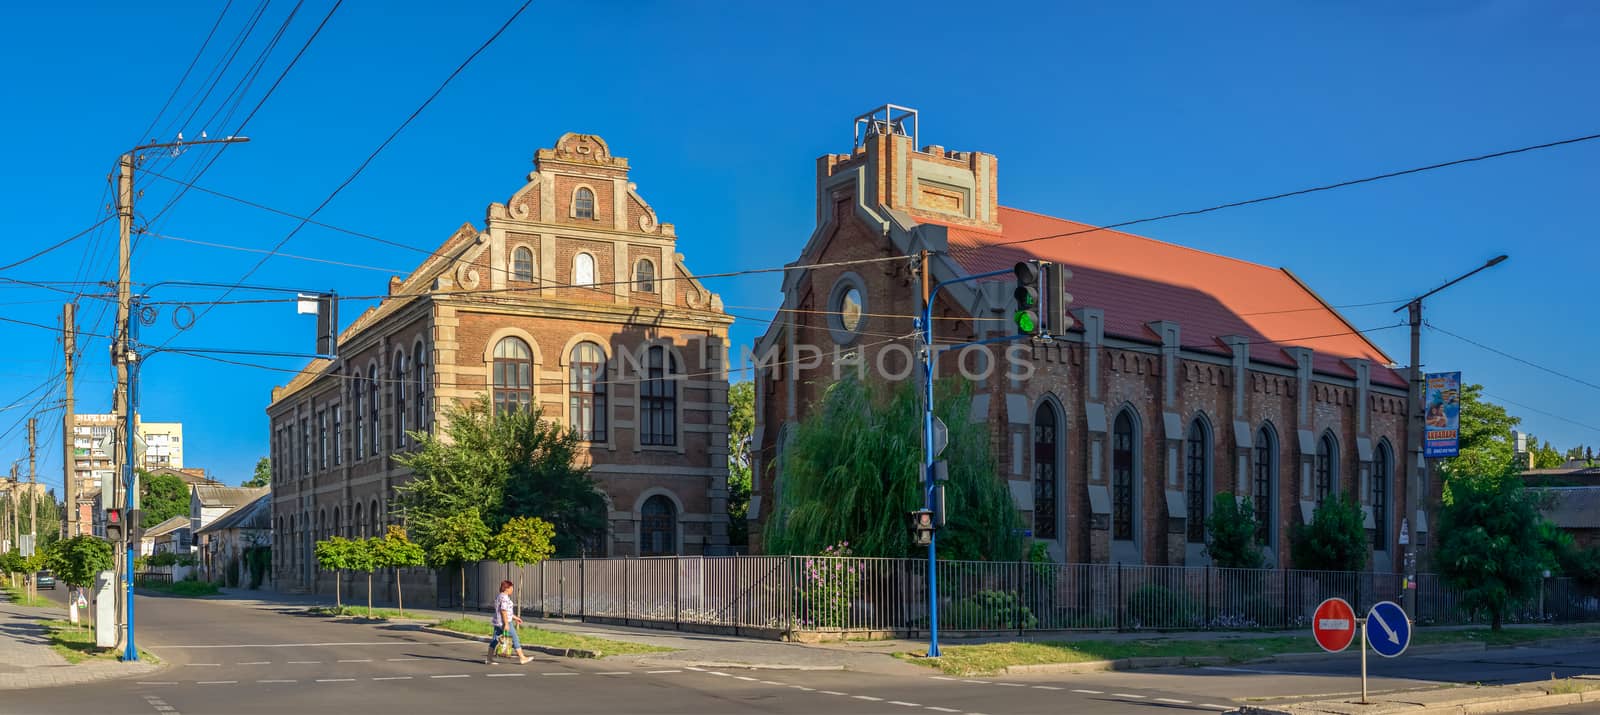 German Church of Christ the Savior in Berdyansk, Ukraine by Multipedia